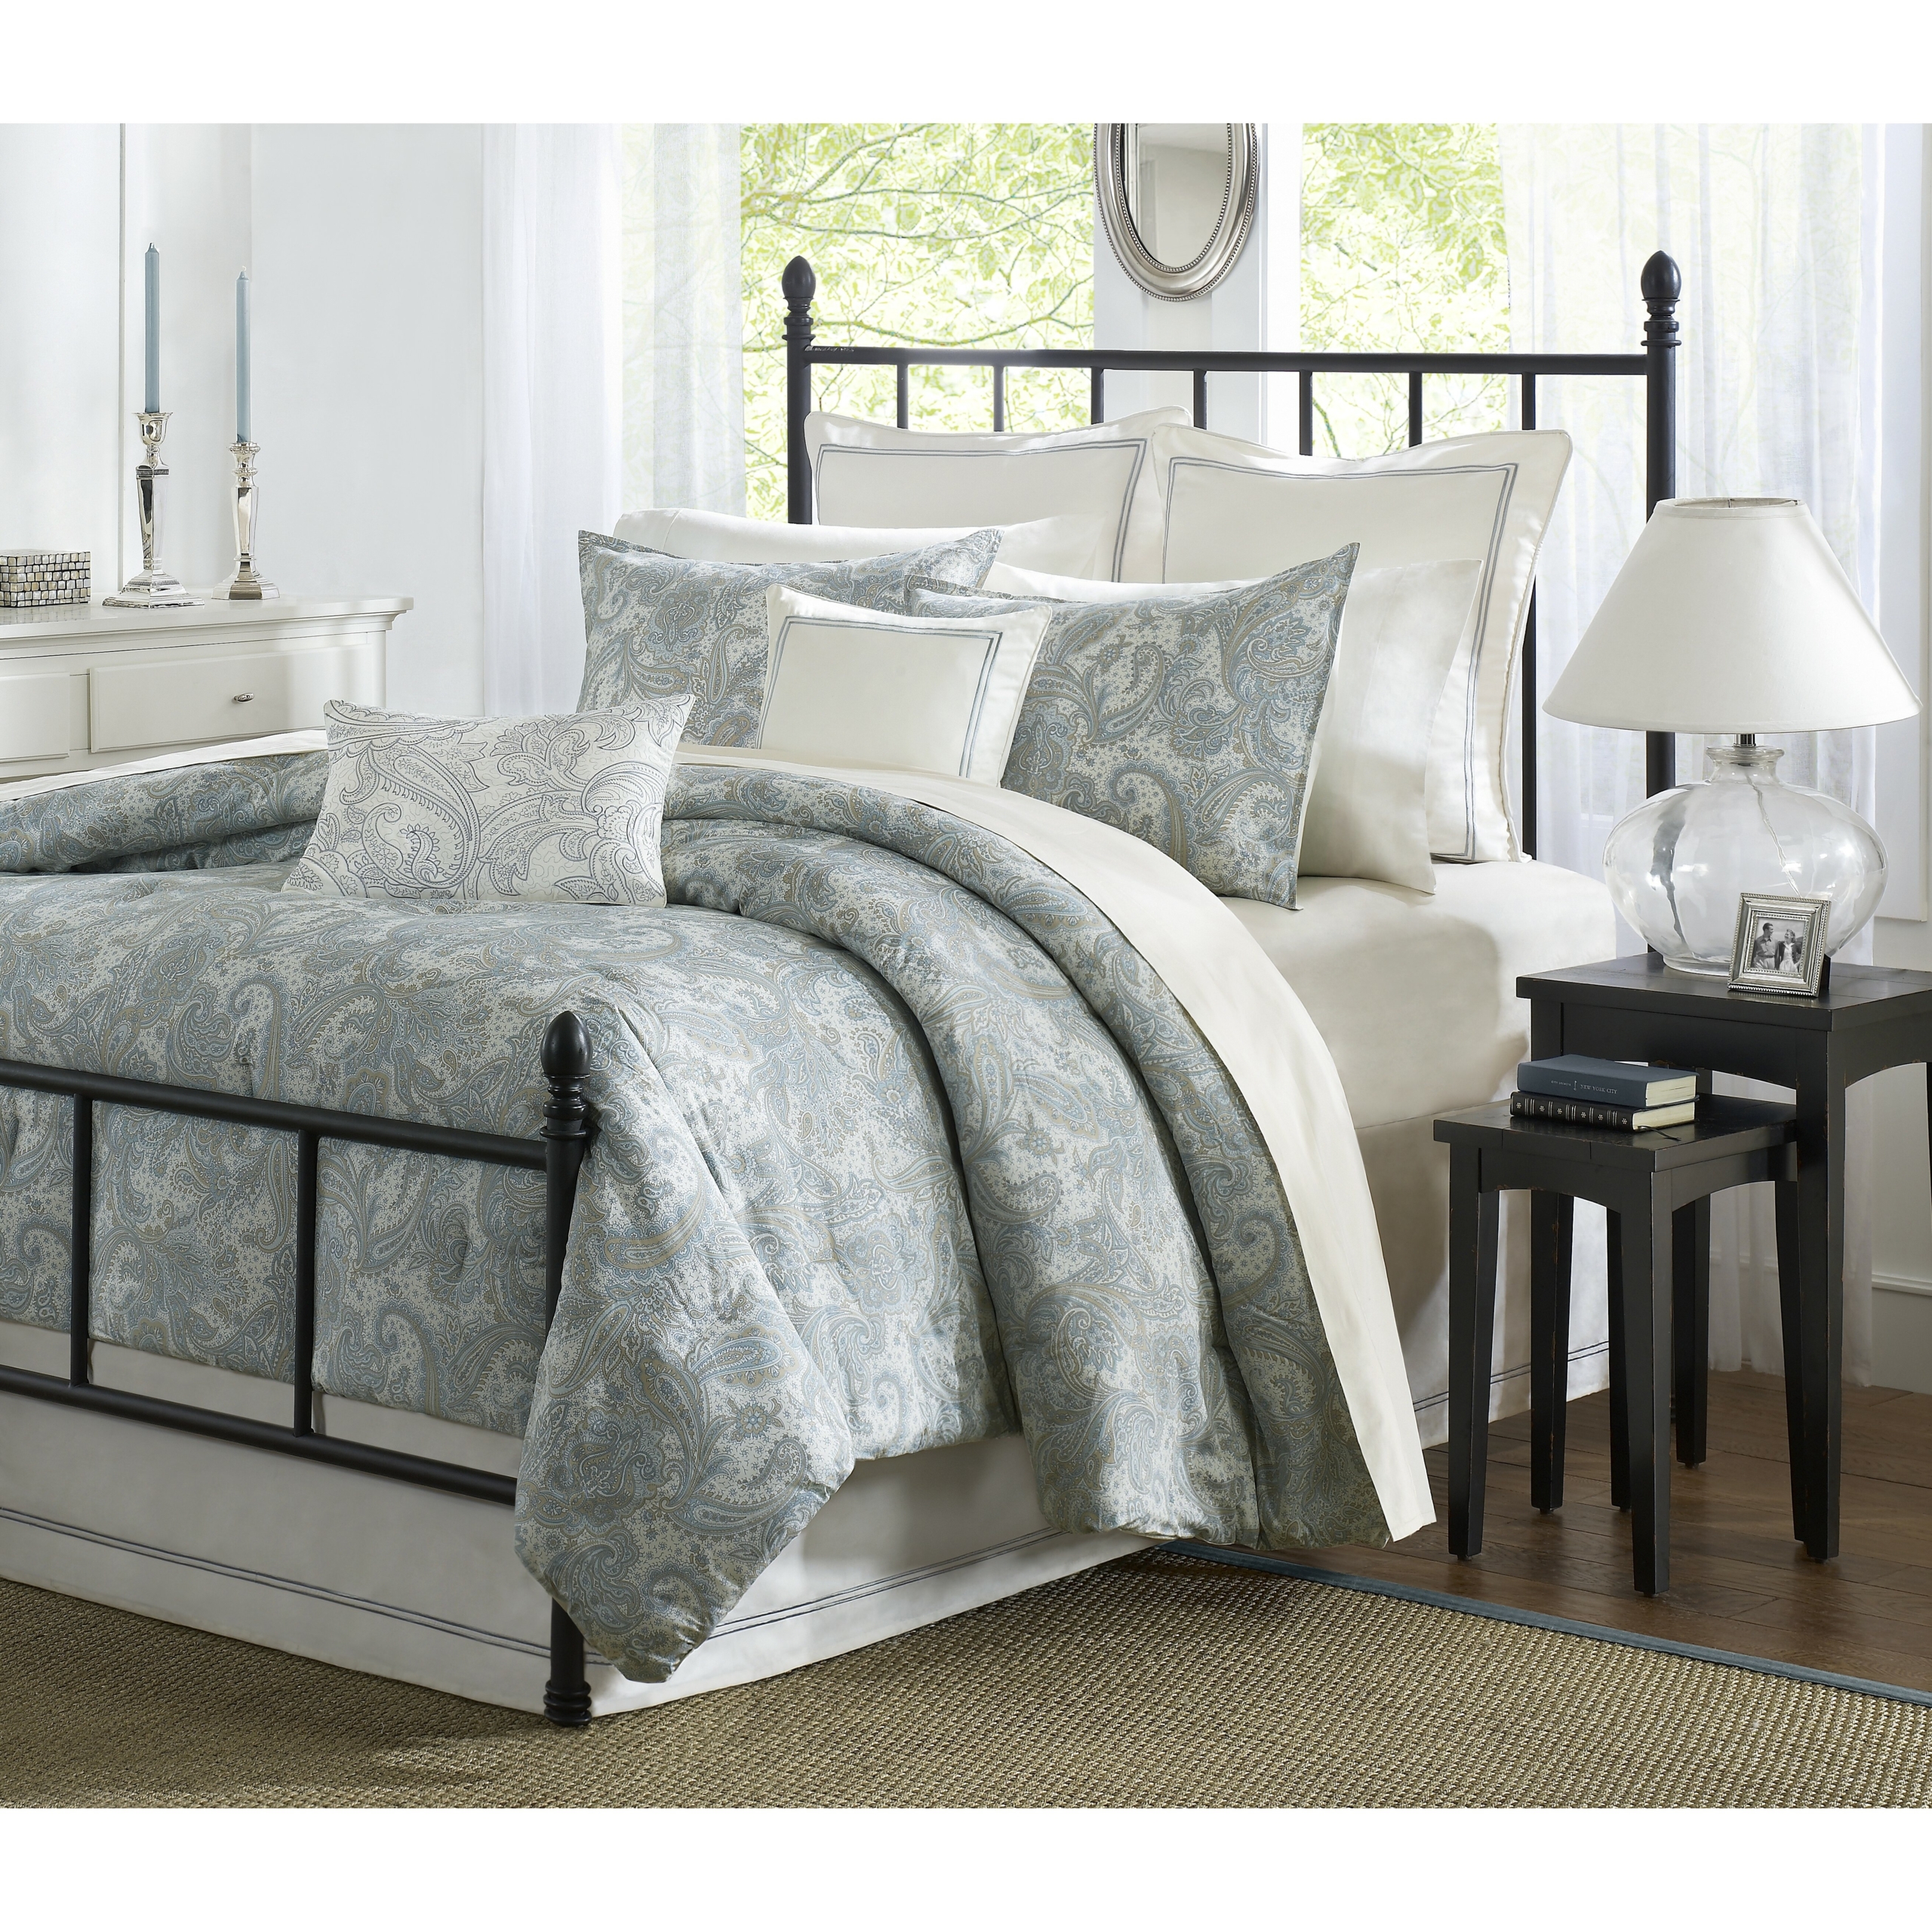 4 Piece King Size Comforter Set in Modern Bedding Design, Blue Paisley, 100% Cotton